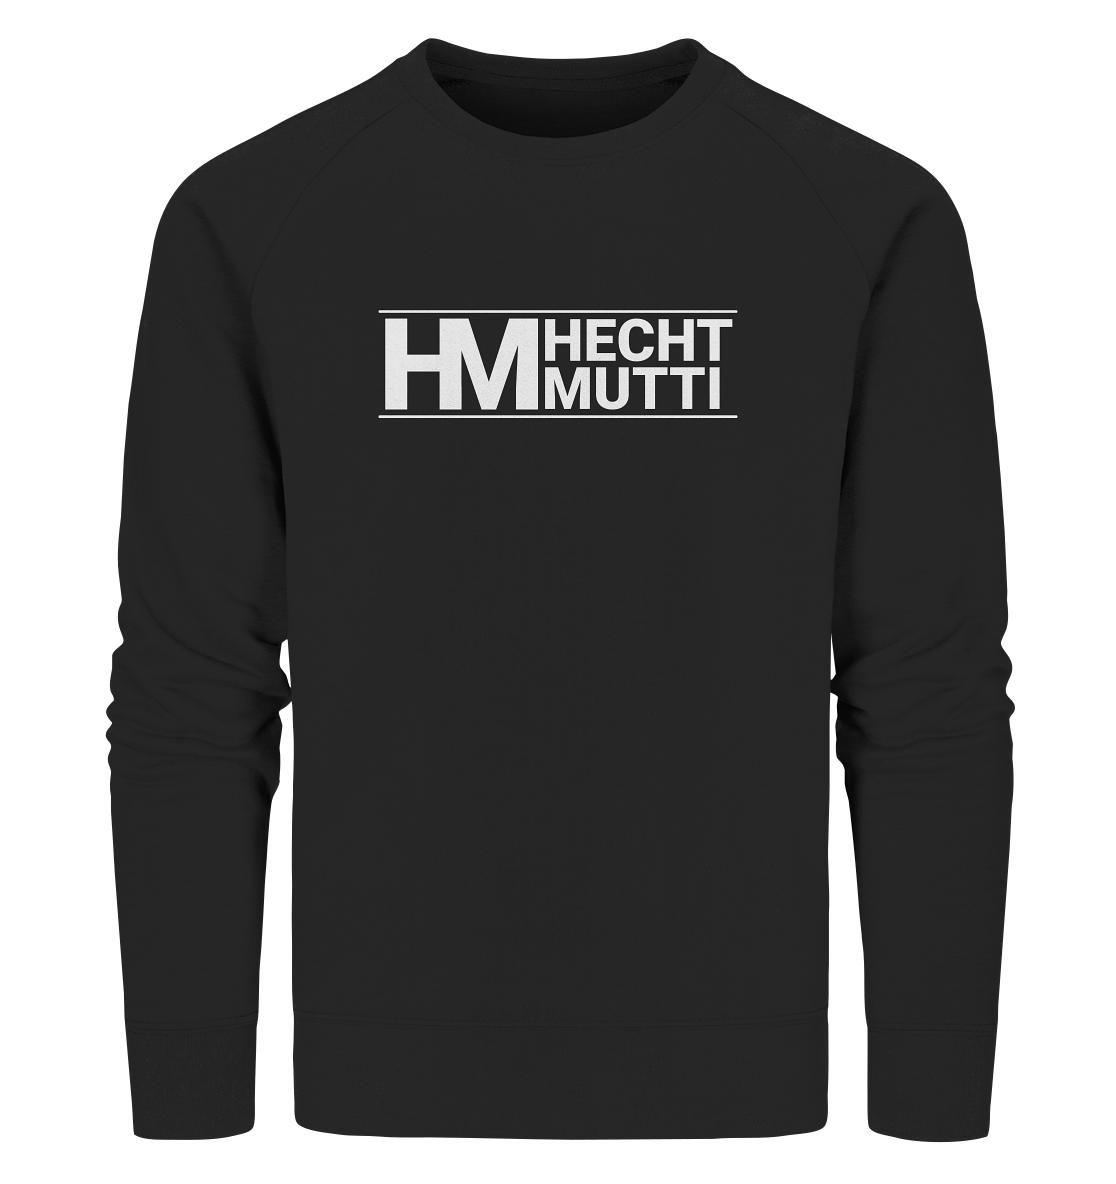 Hechtmutti - Männer Bio Sweatshirt